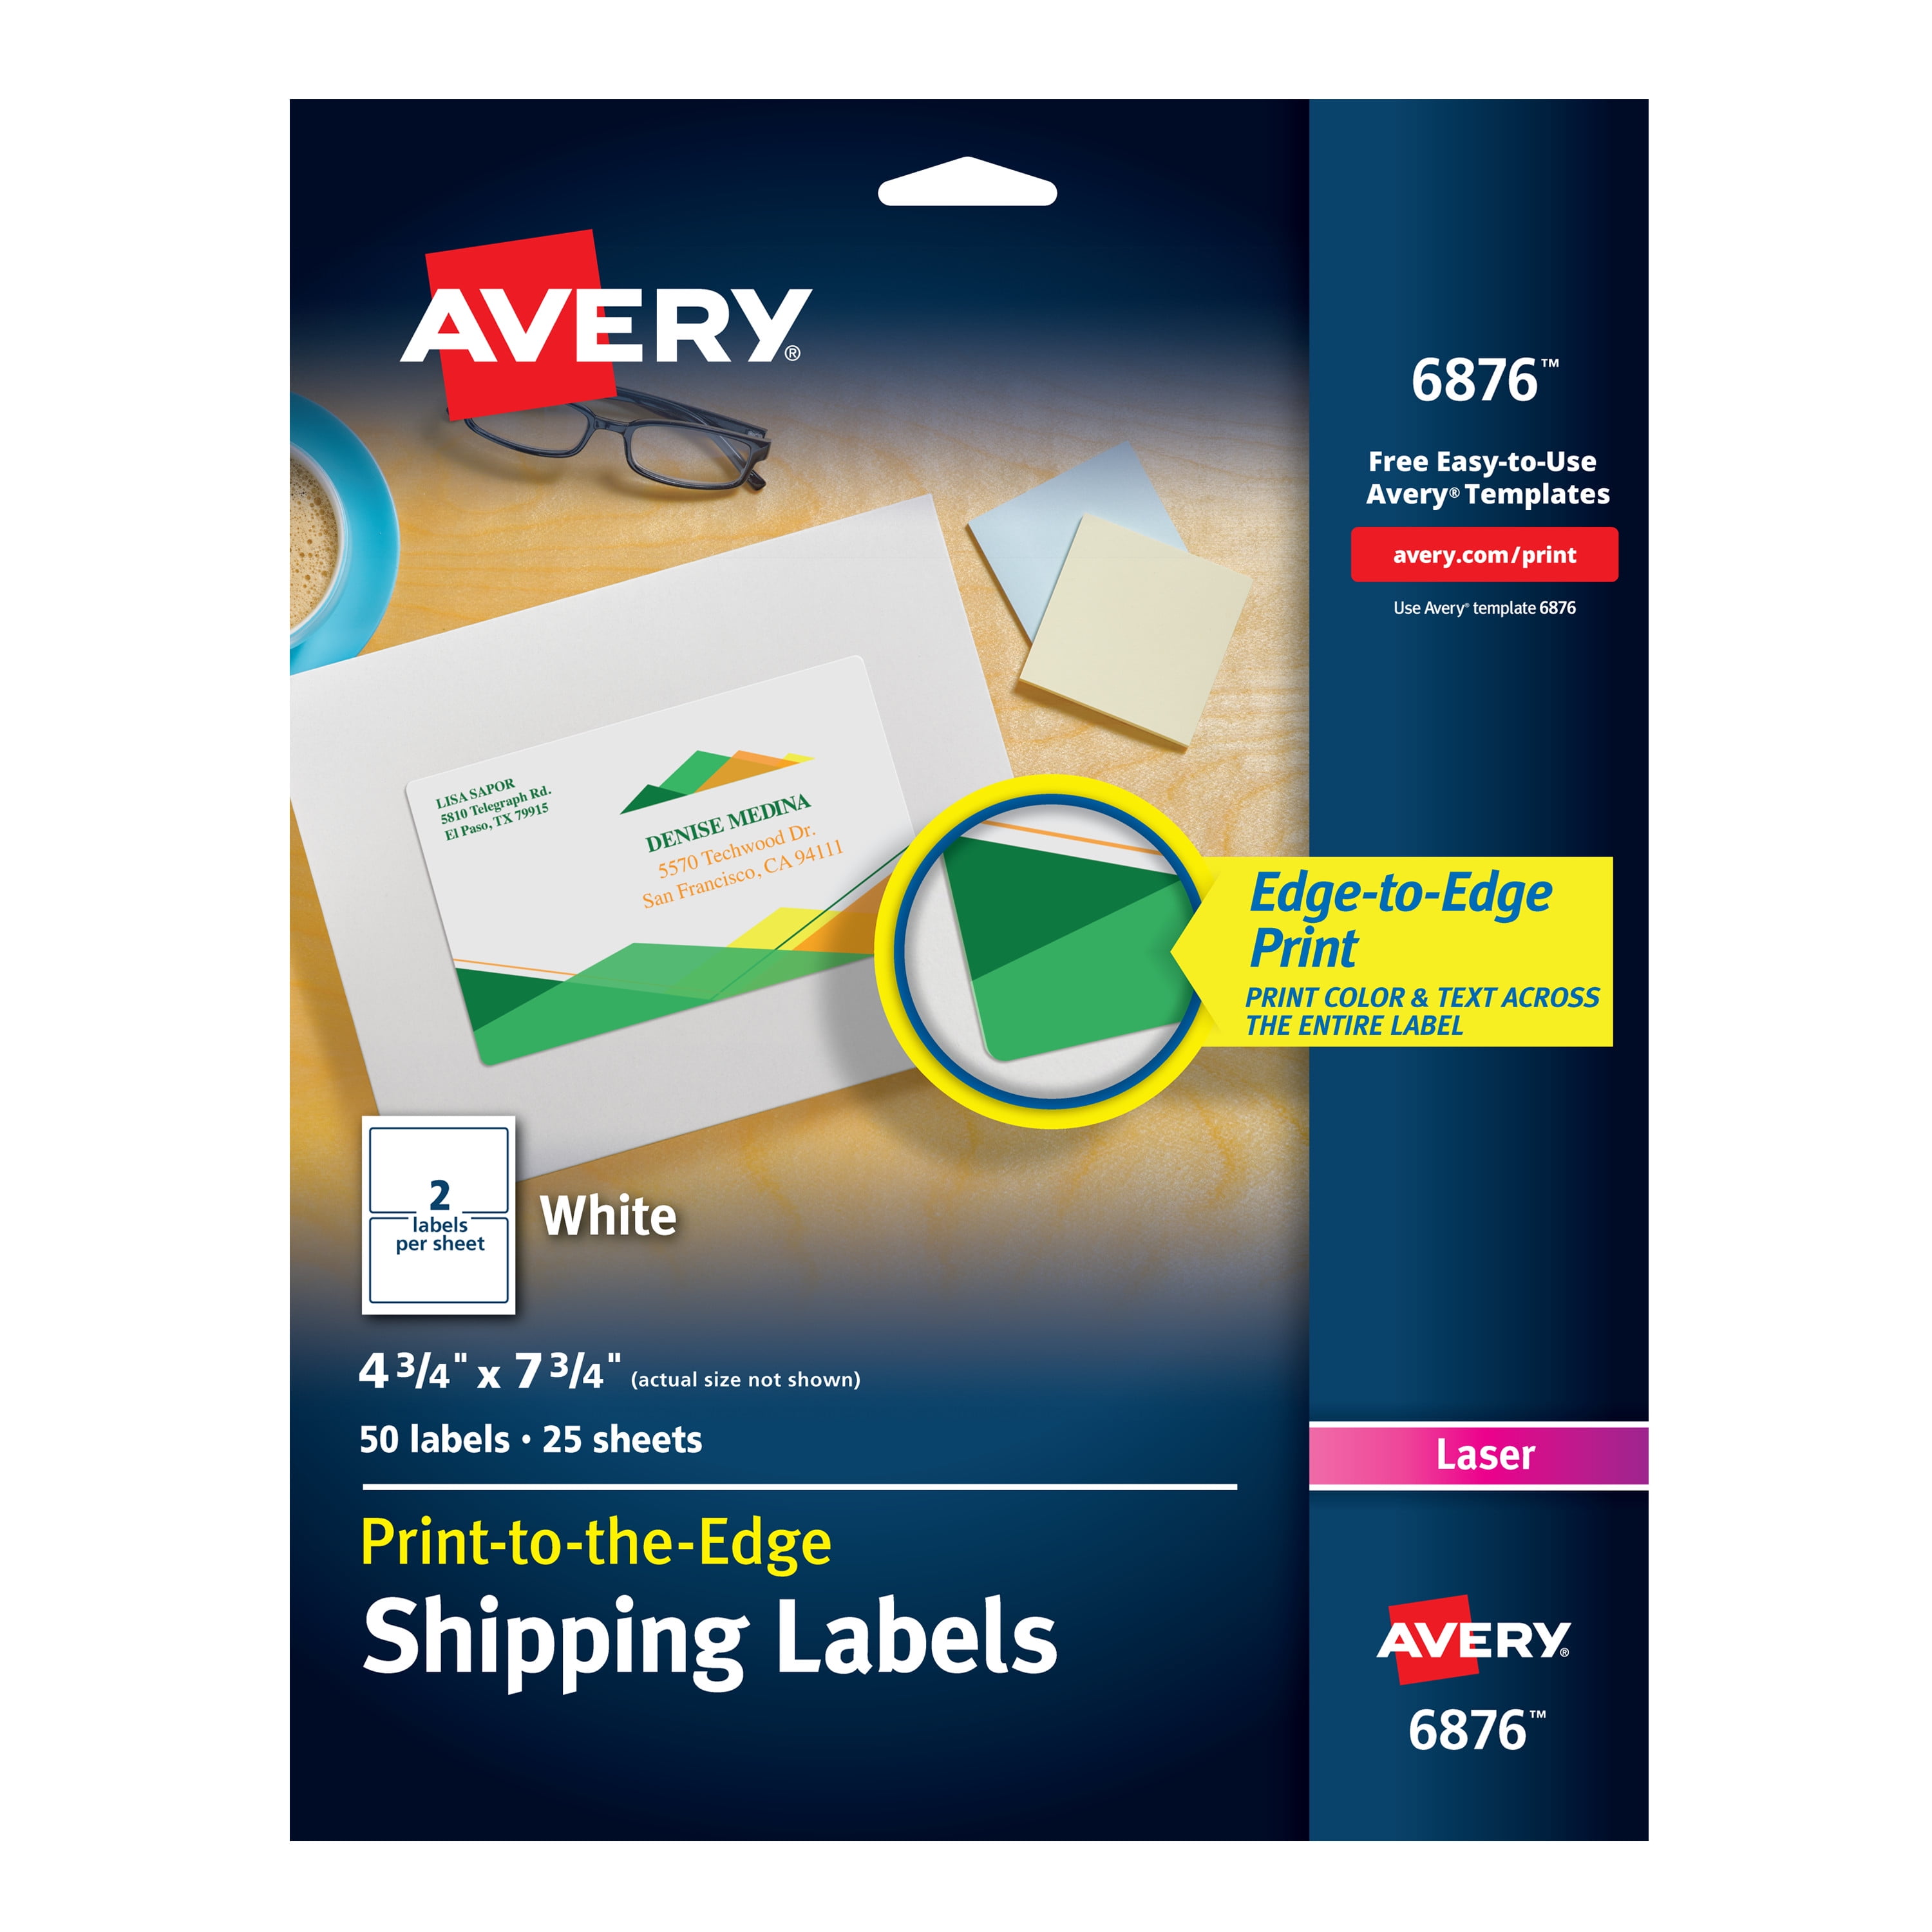 Avery 4x2 label template - nbvsa